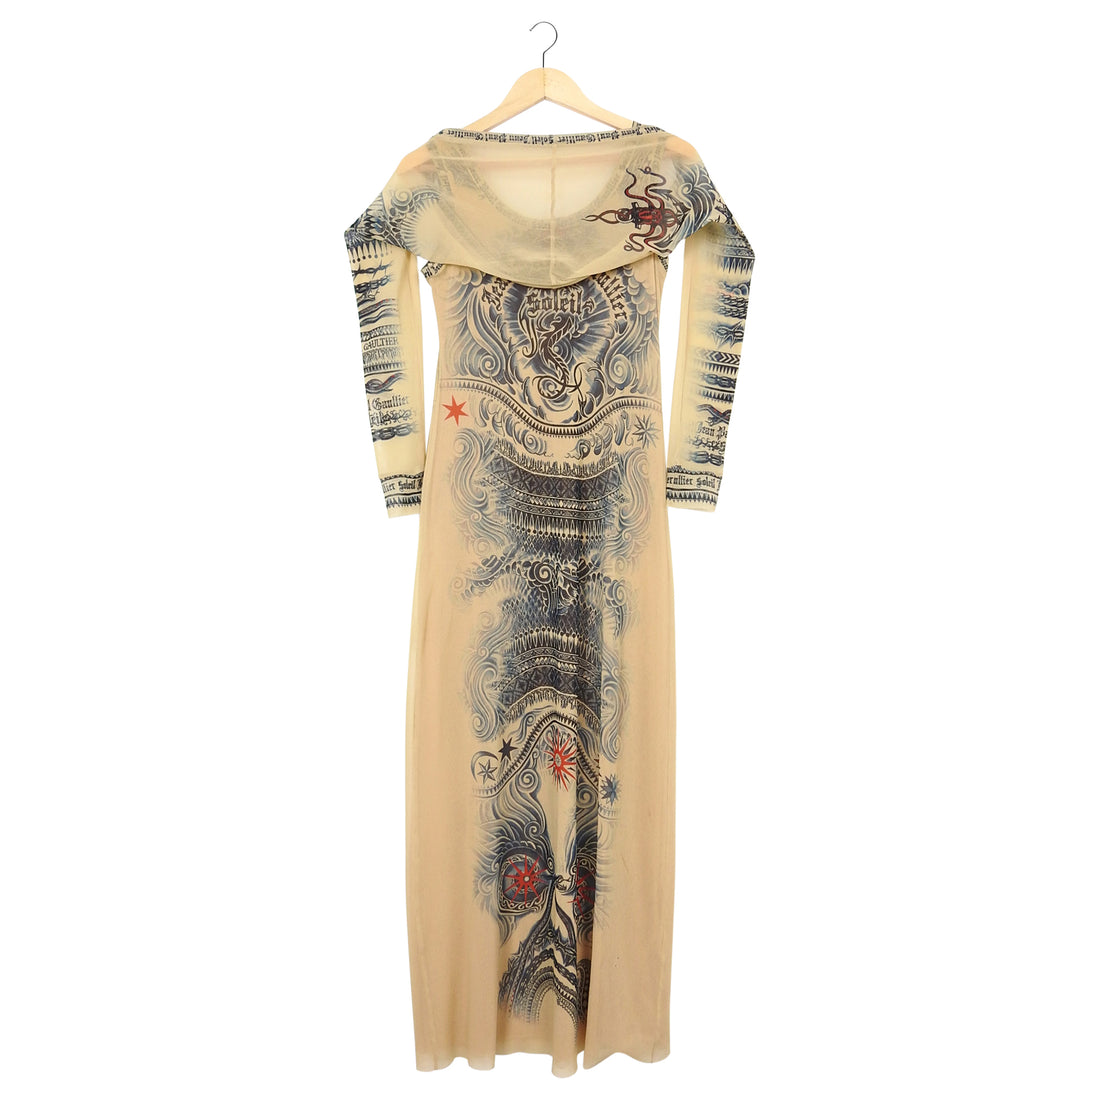 Jean Paul Gaultier Soleil Vintage Mesh Tattoo Bodycon Dress – L / XL